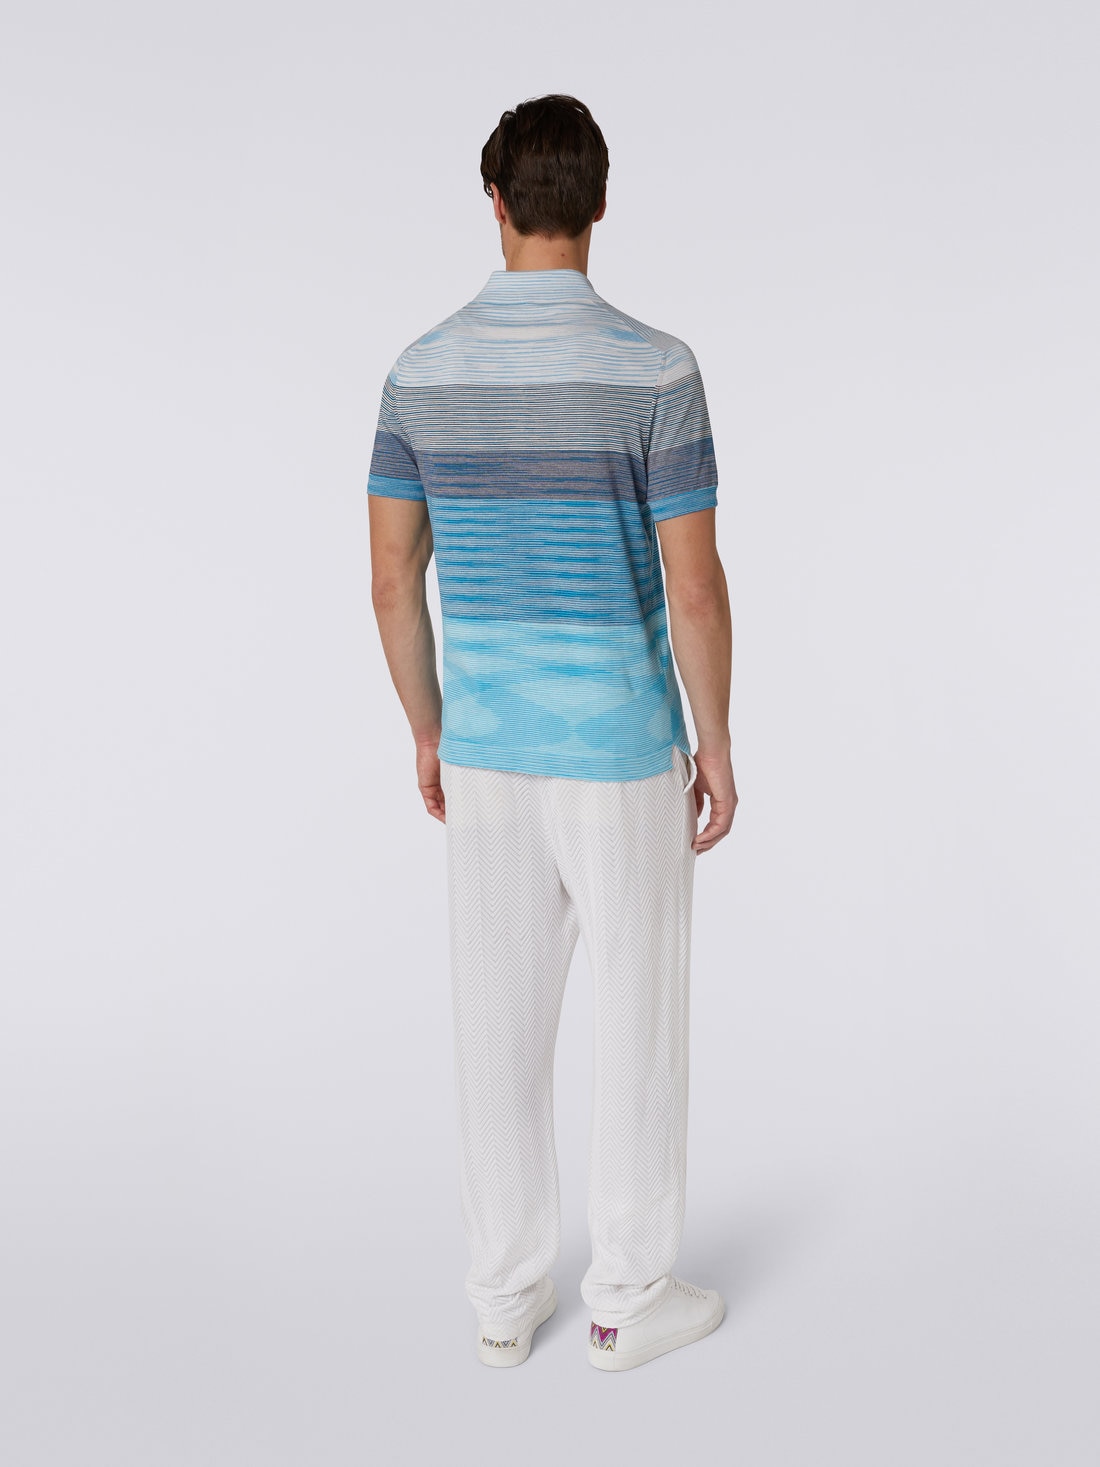 Kurzärmeliges Poloshirt aus gestreifter Baumwolle mit Dégradé-Effekt, Weiß & Hellblau - US23S20PBK012QS7294 - 3